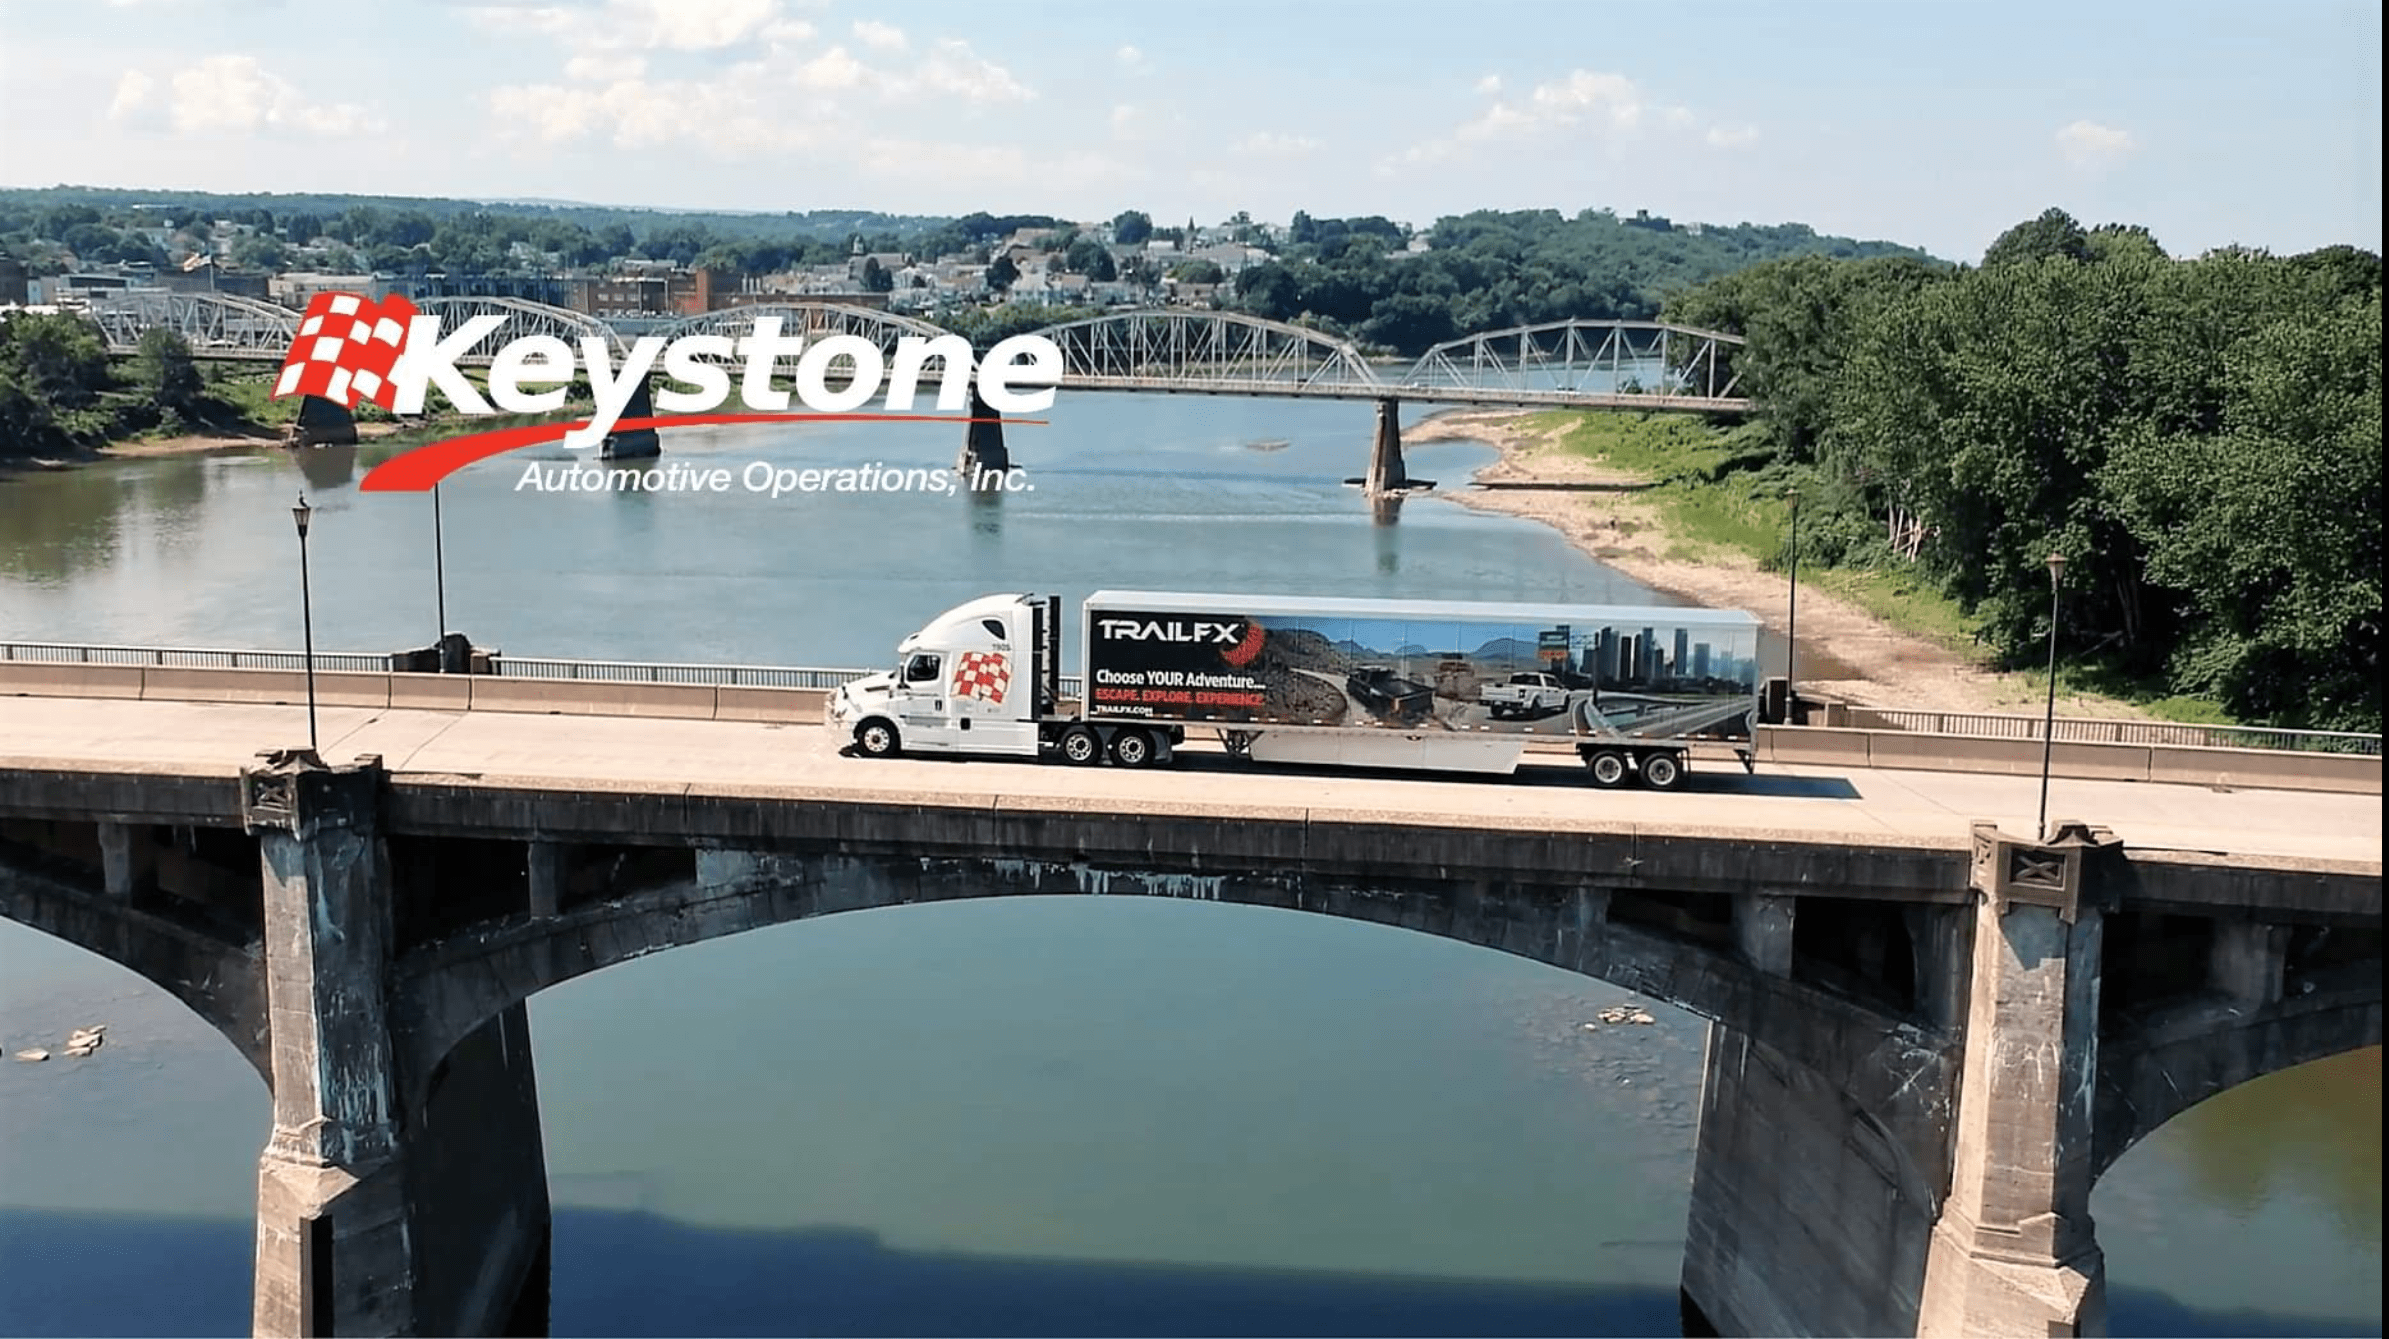 Keystone Automotive Operations distributor